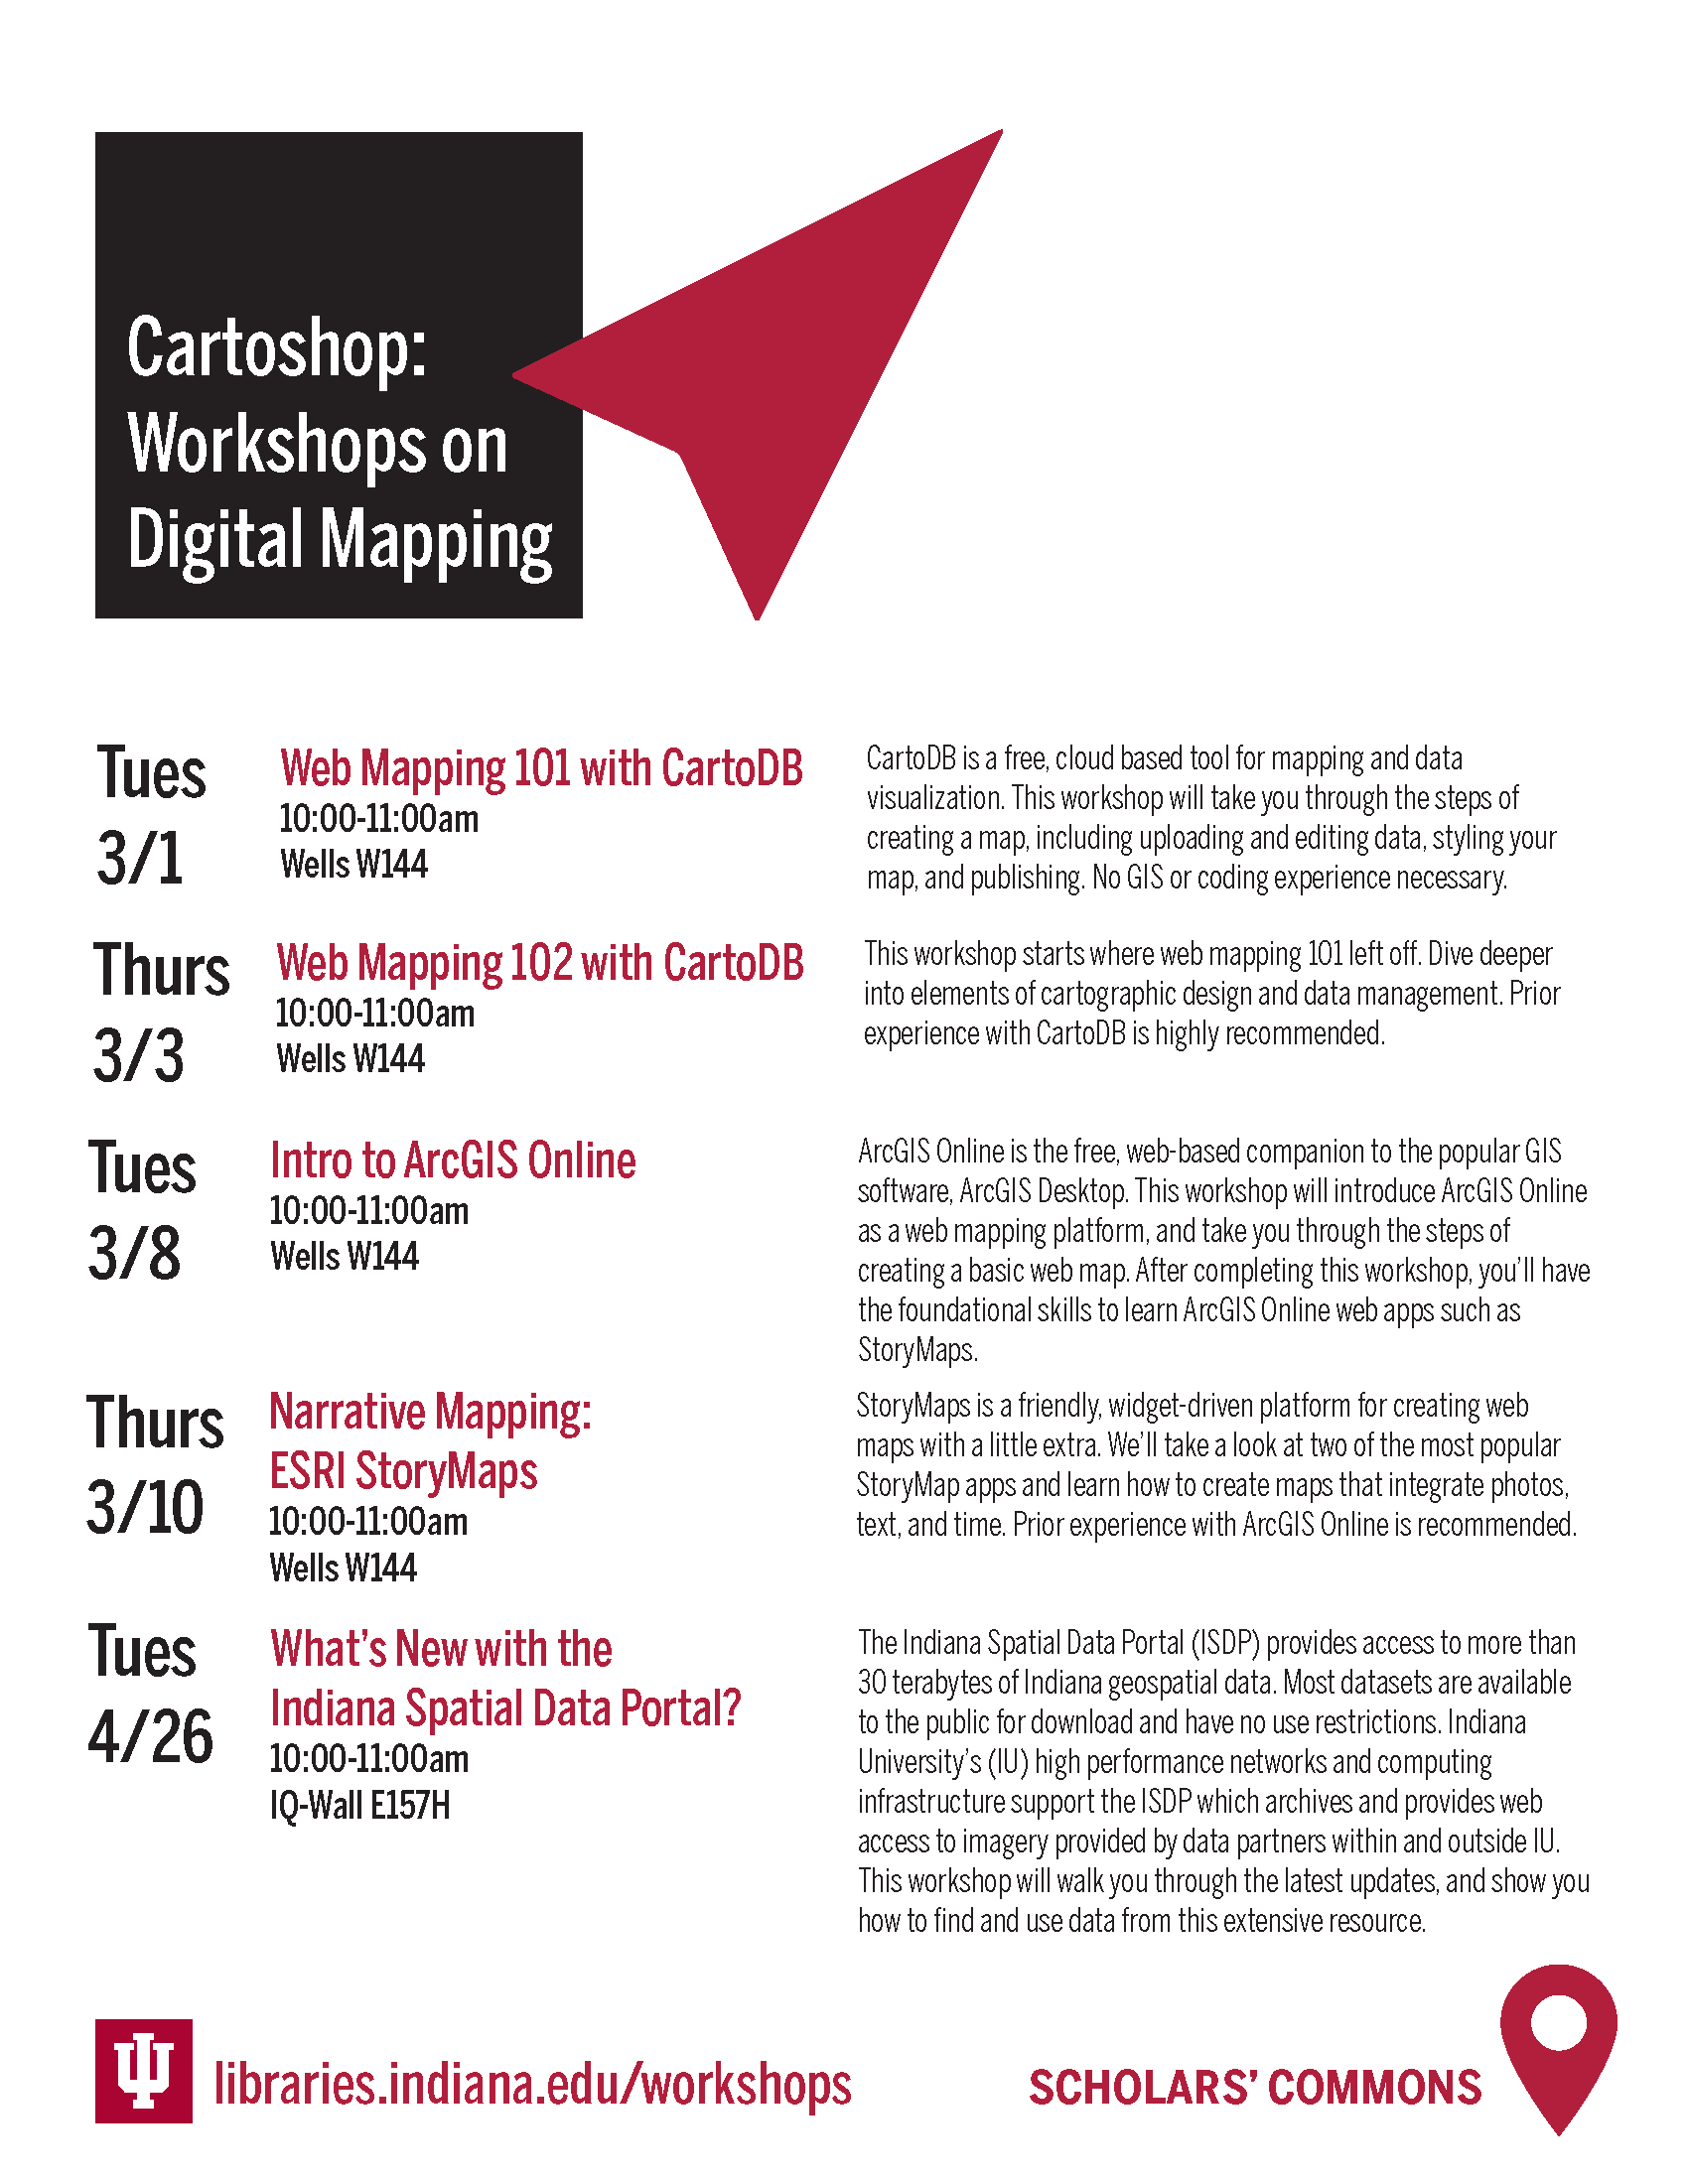 Cartoshop workshop flyer